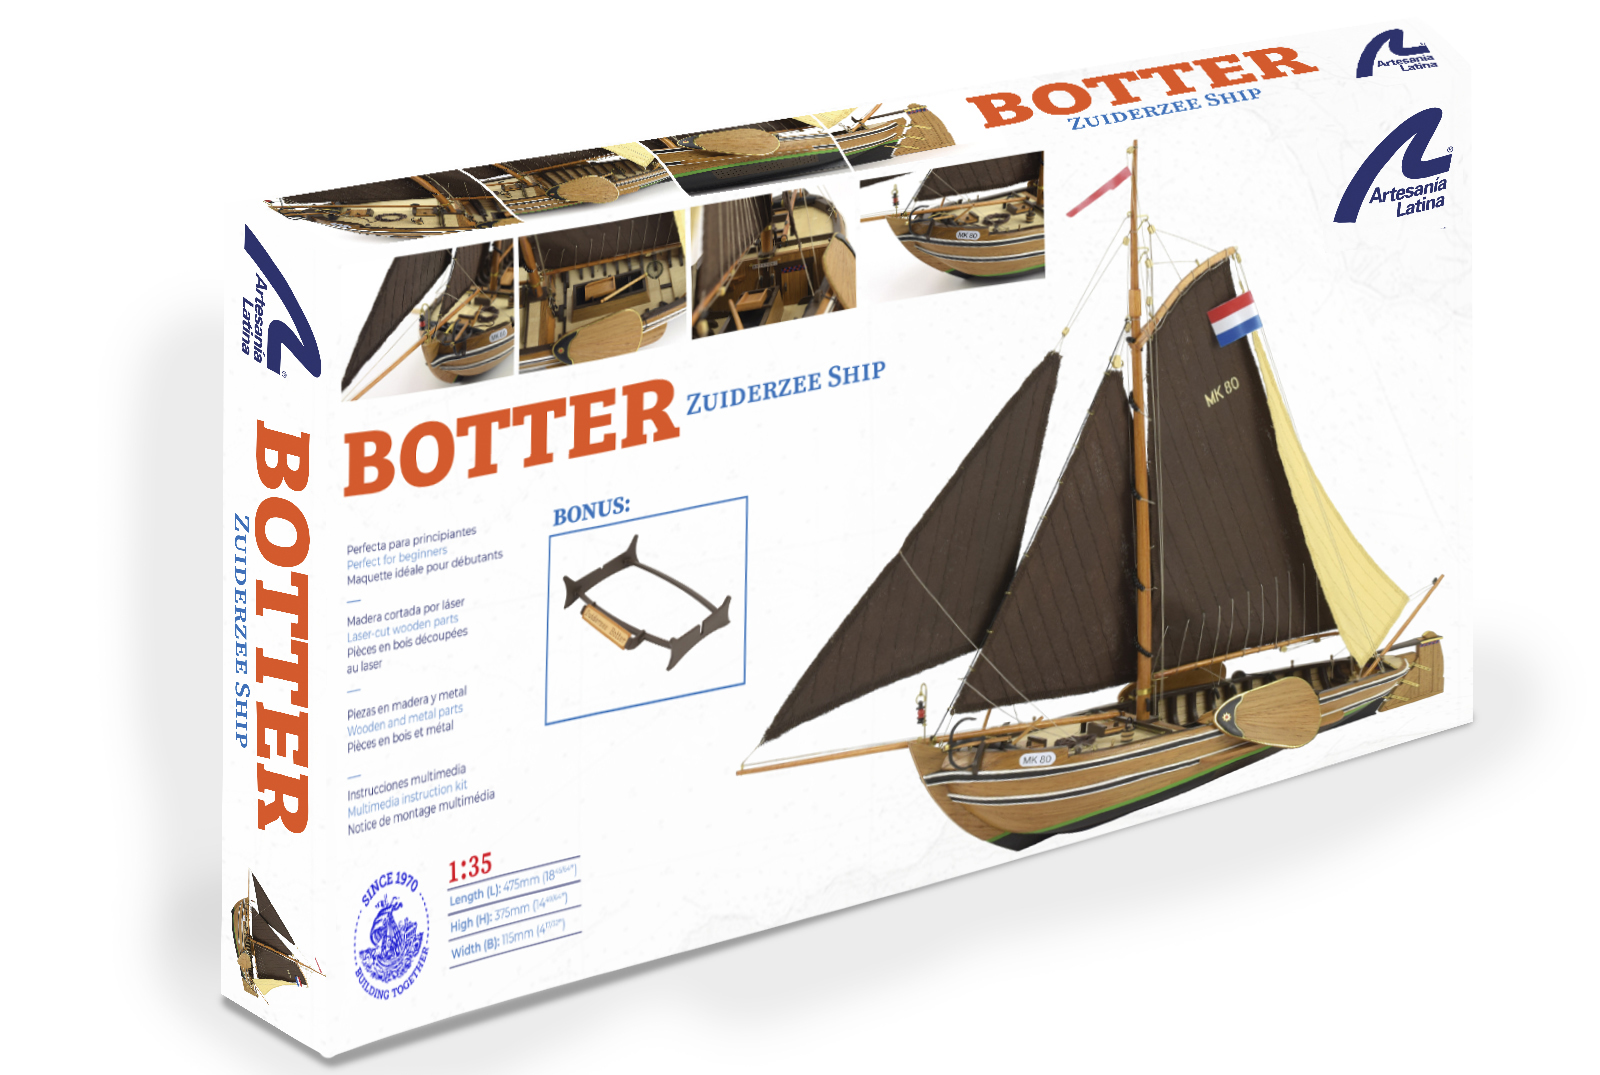 New Ship Model Kit: Dutch Wooden Fishing Boat Model Botter (22125) by Artesanía Latina.